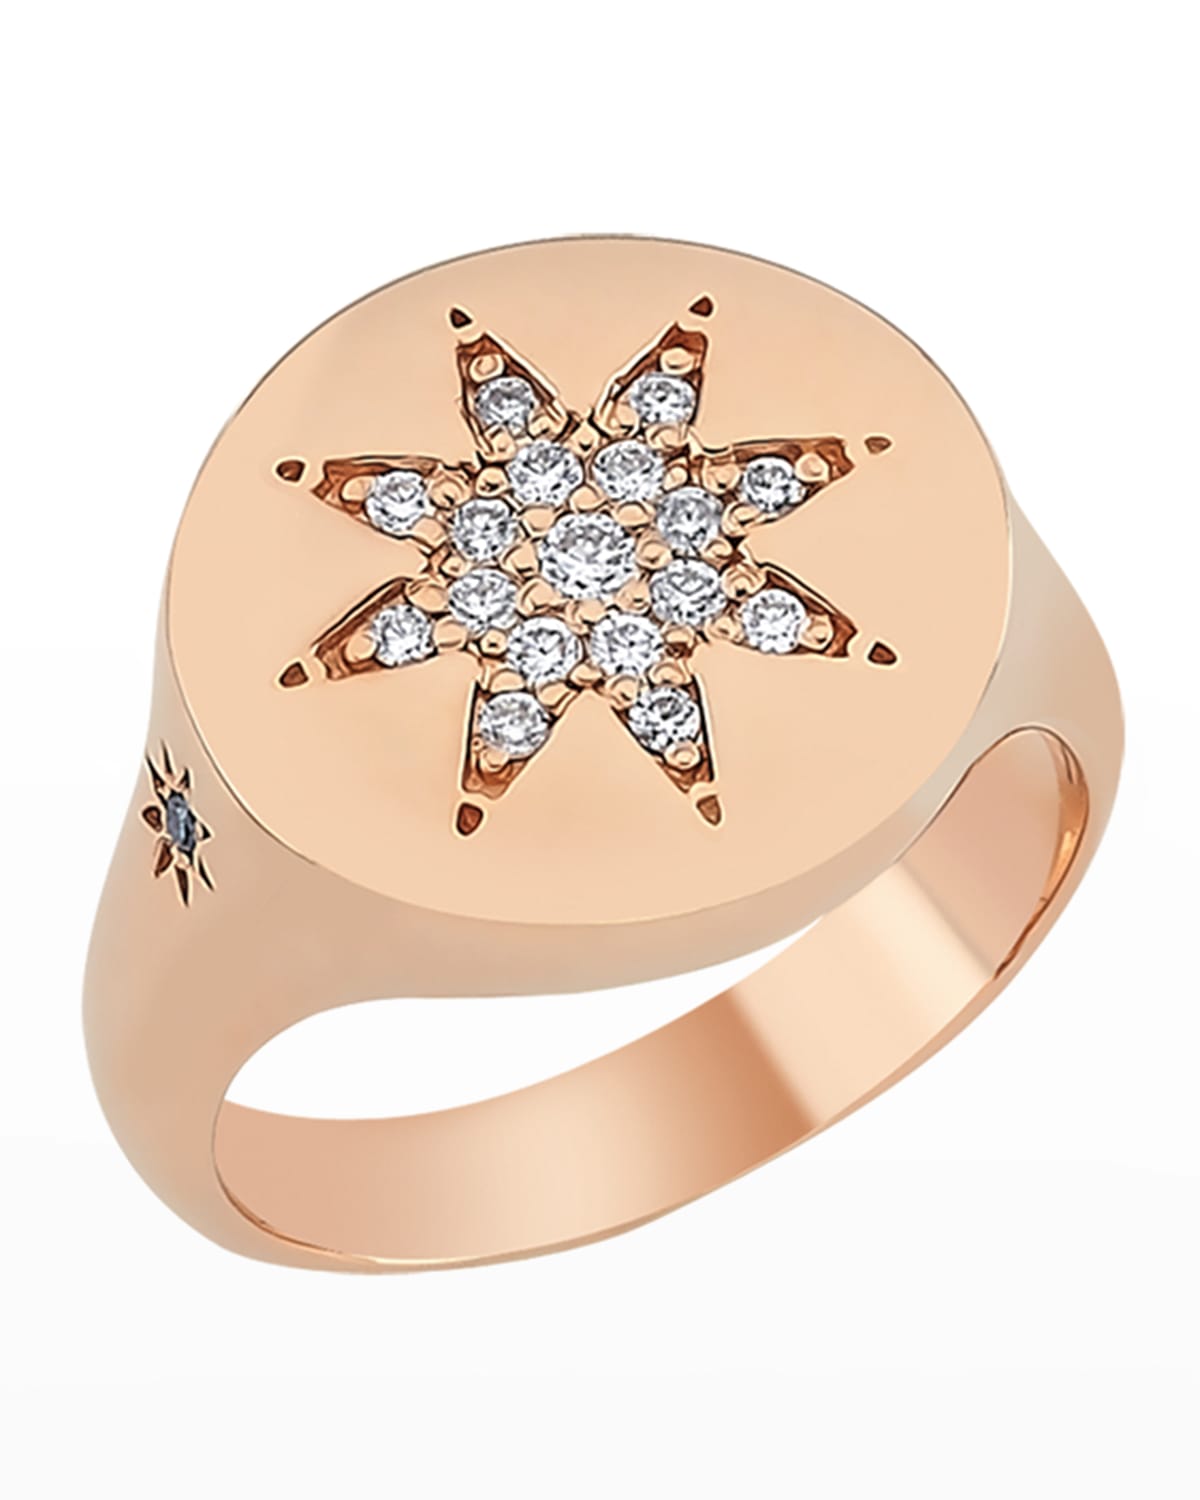 BeeGoddess Venus Star 14k Diamond Pinky Ring, Size 7